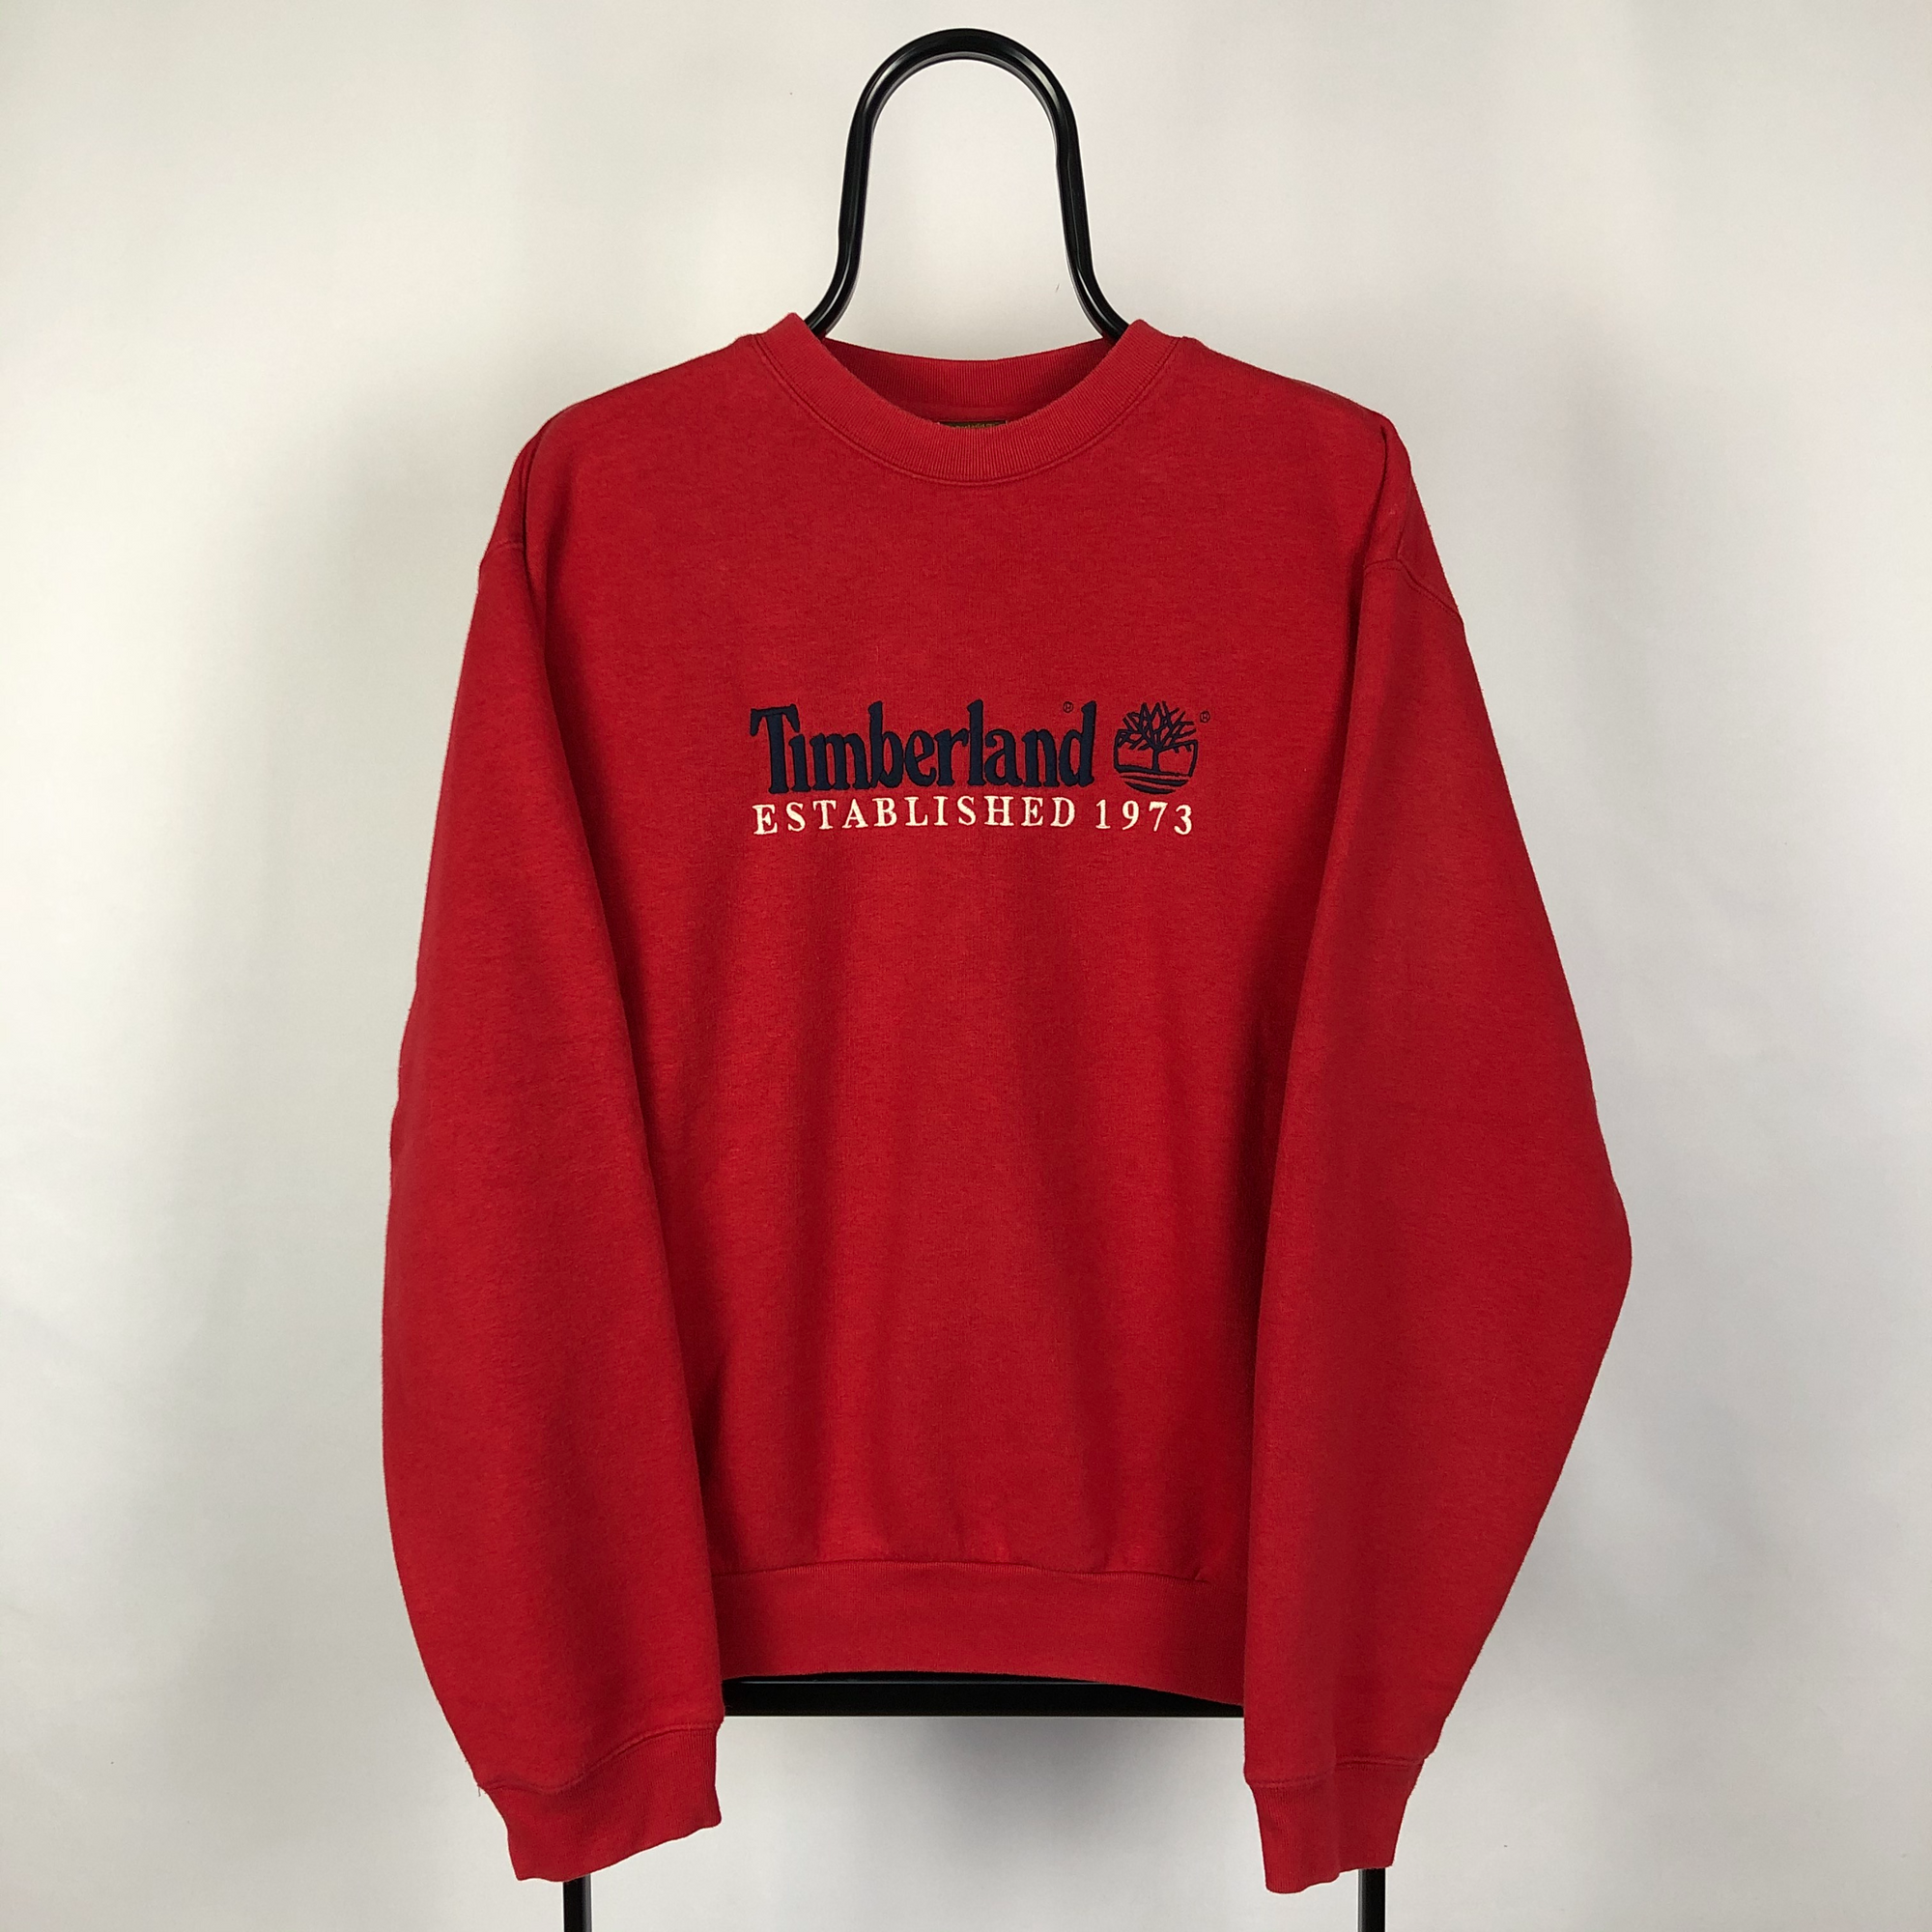 Vintage Timberland Sweatshirt in Red - Men's Medium/Women's Large